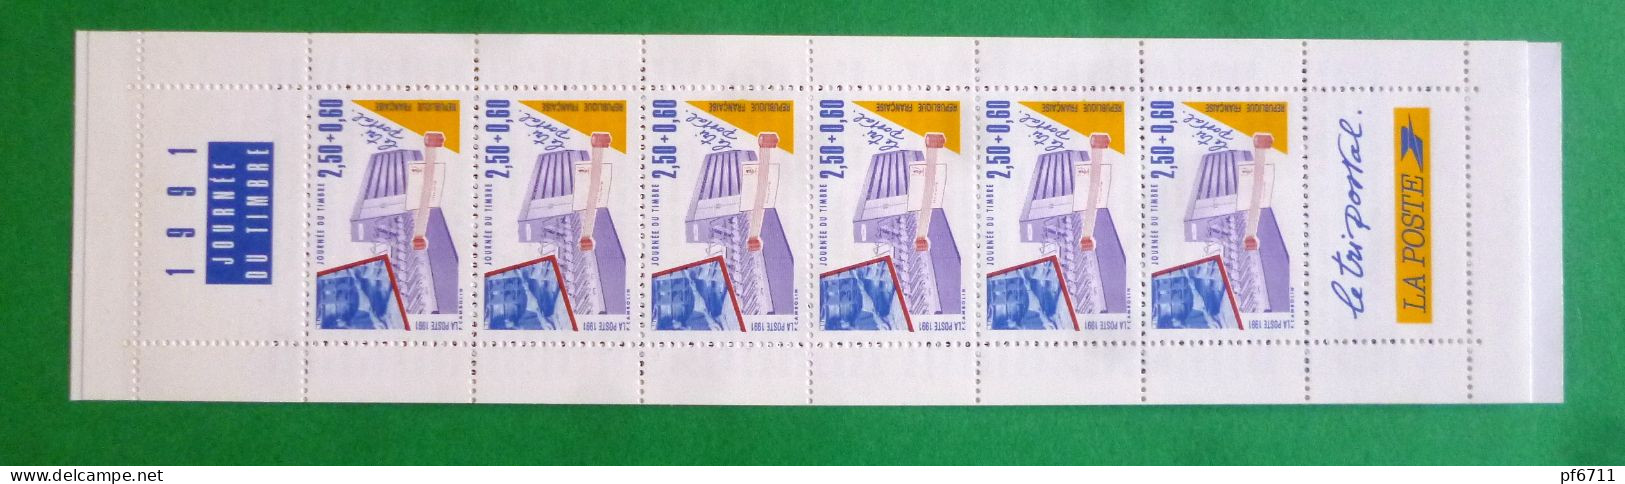 Carnet  N° 2689A  De 1991   Métiers De La Poste - Dag Van De Postzegel